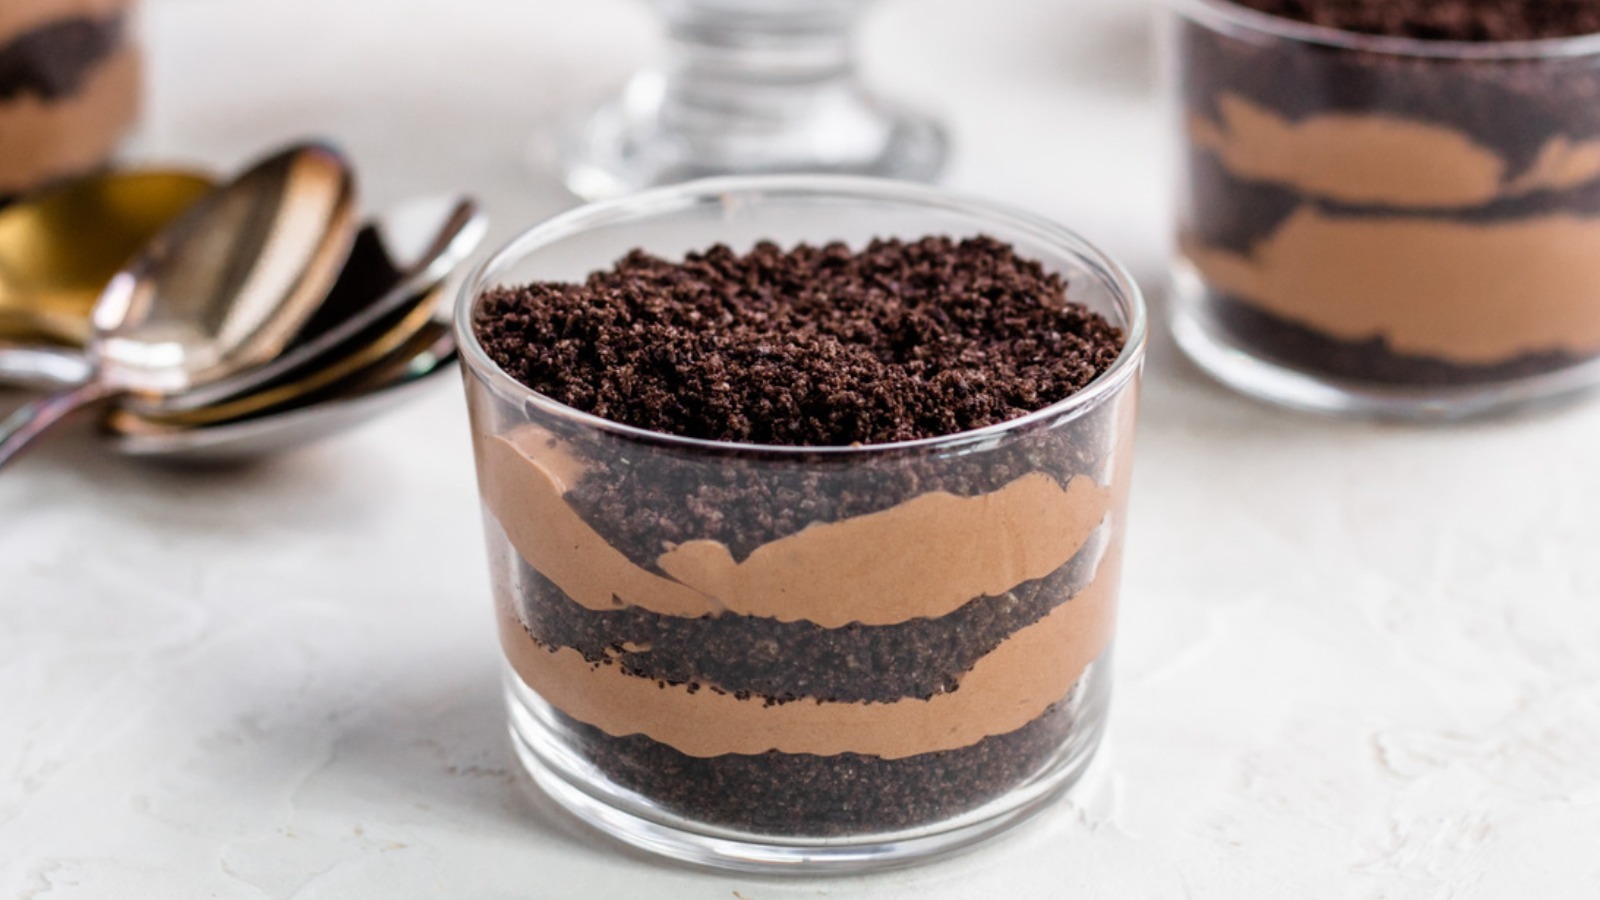 Dirt Cake Recipe: How to Make It